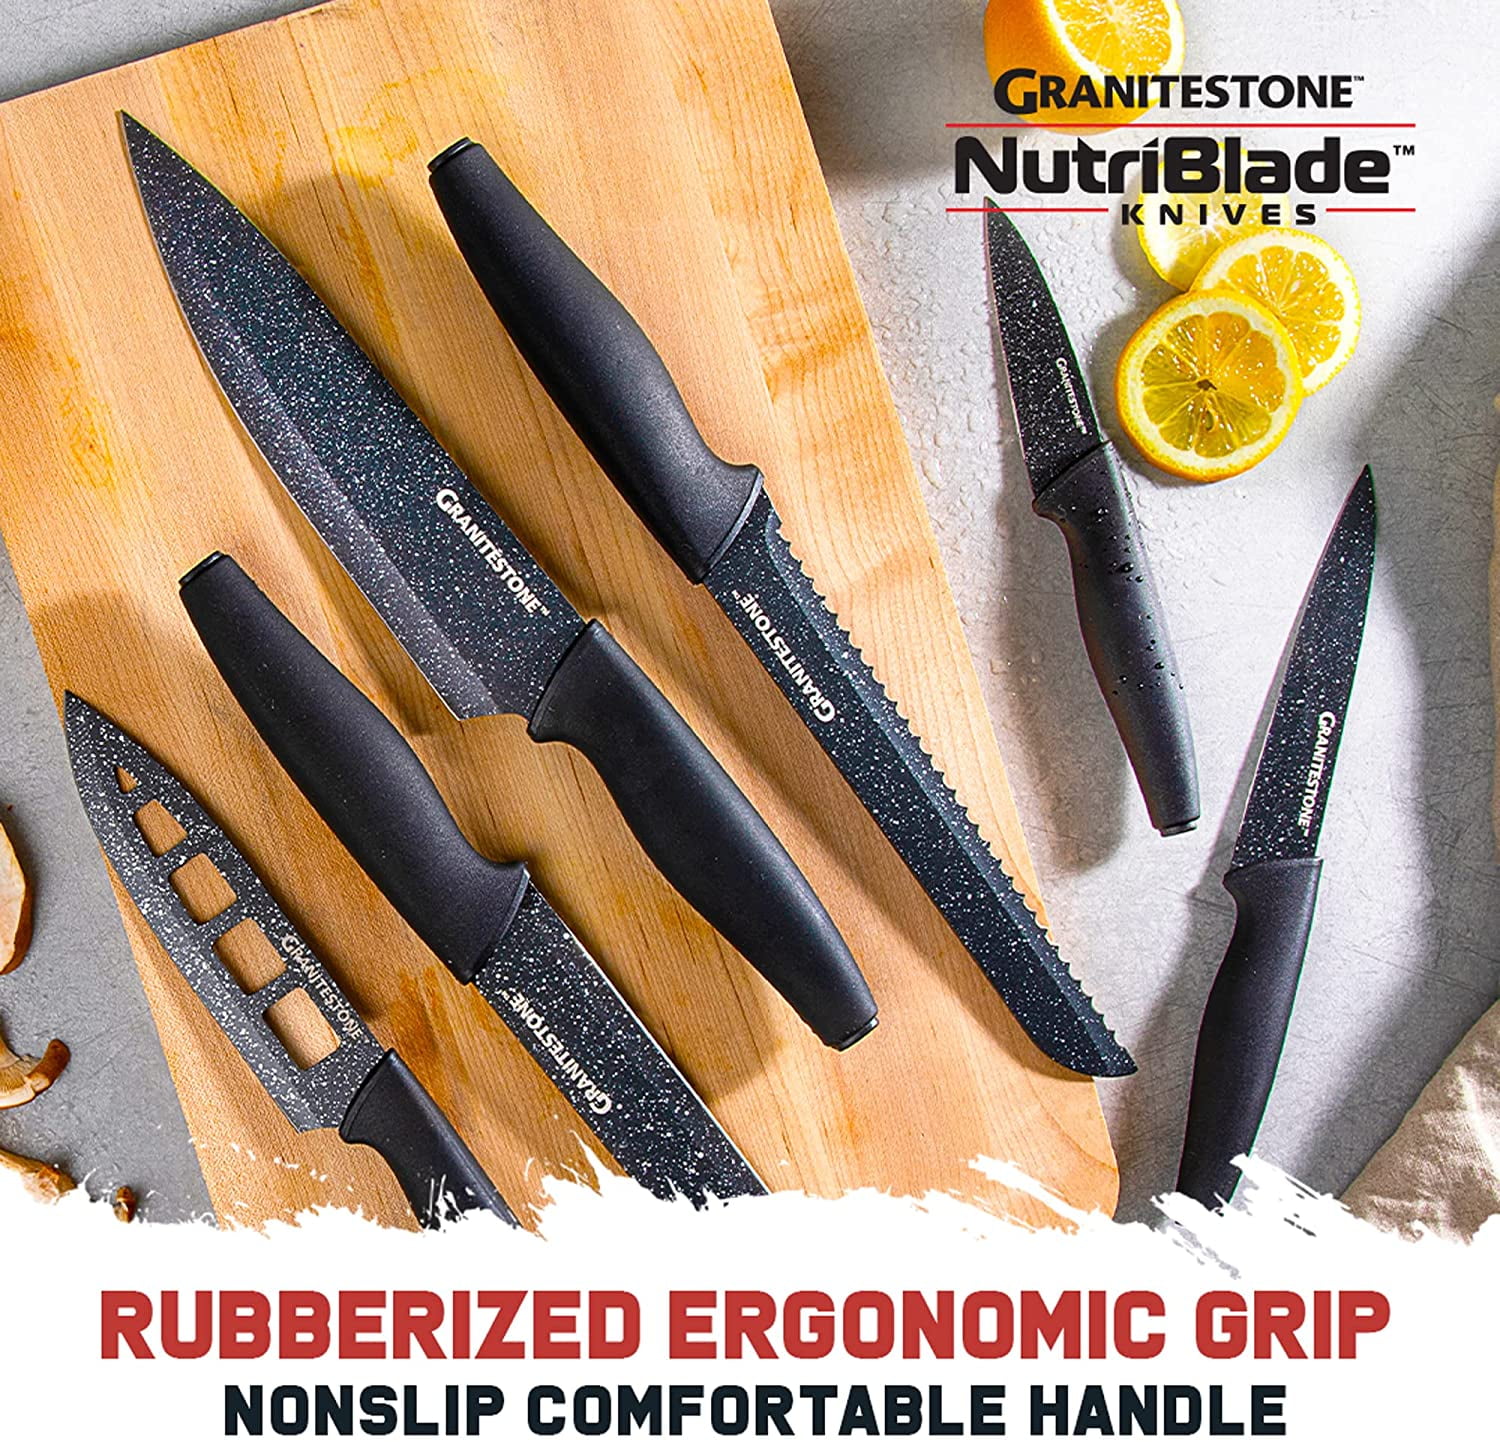 Granitestone NutriBlade 12 Piece Knife Set Nonstick High-Grade Stainless  Blades